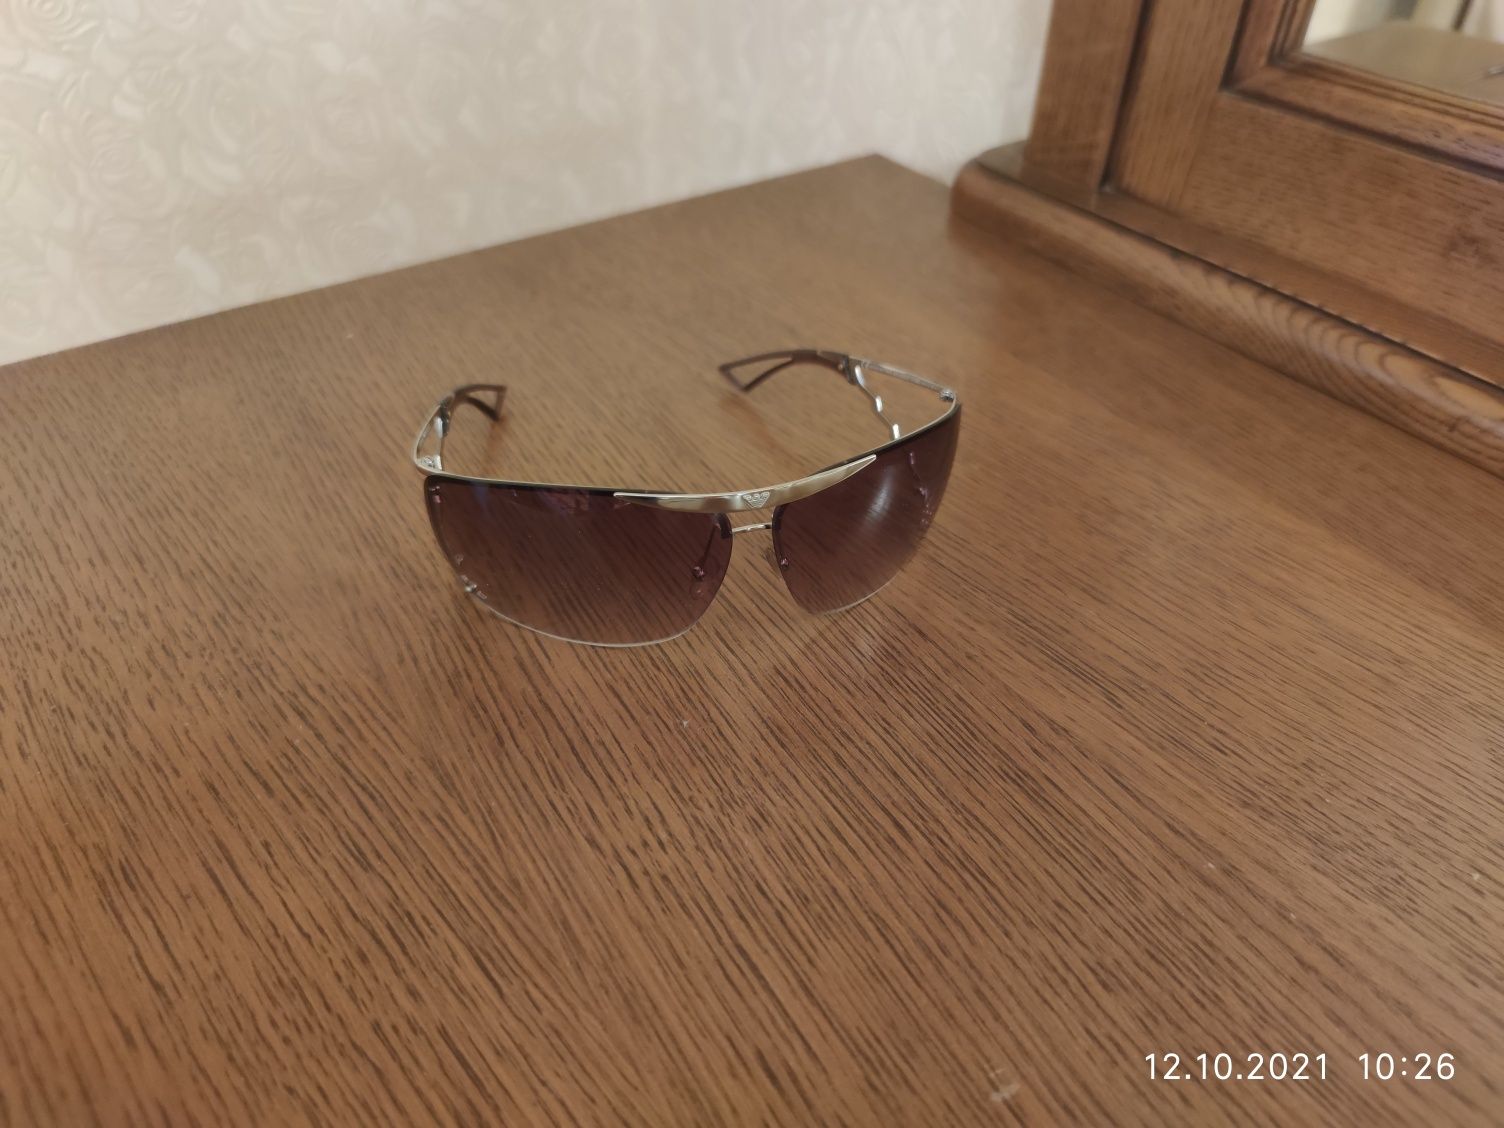 Солнцезащитные очки Армани оригинал.